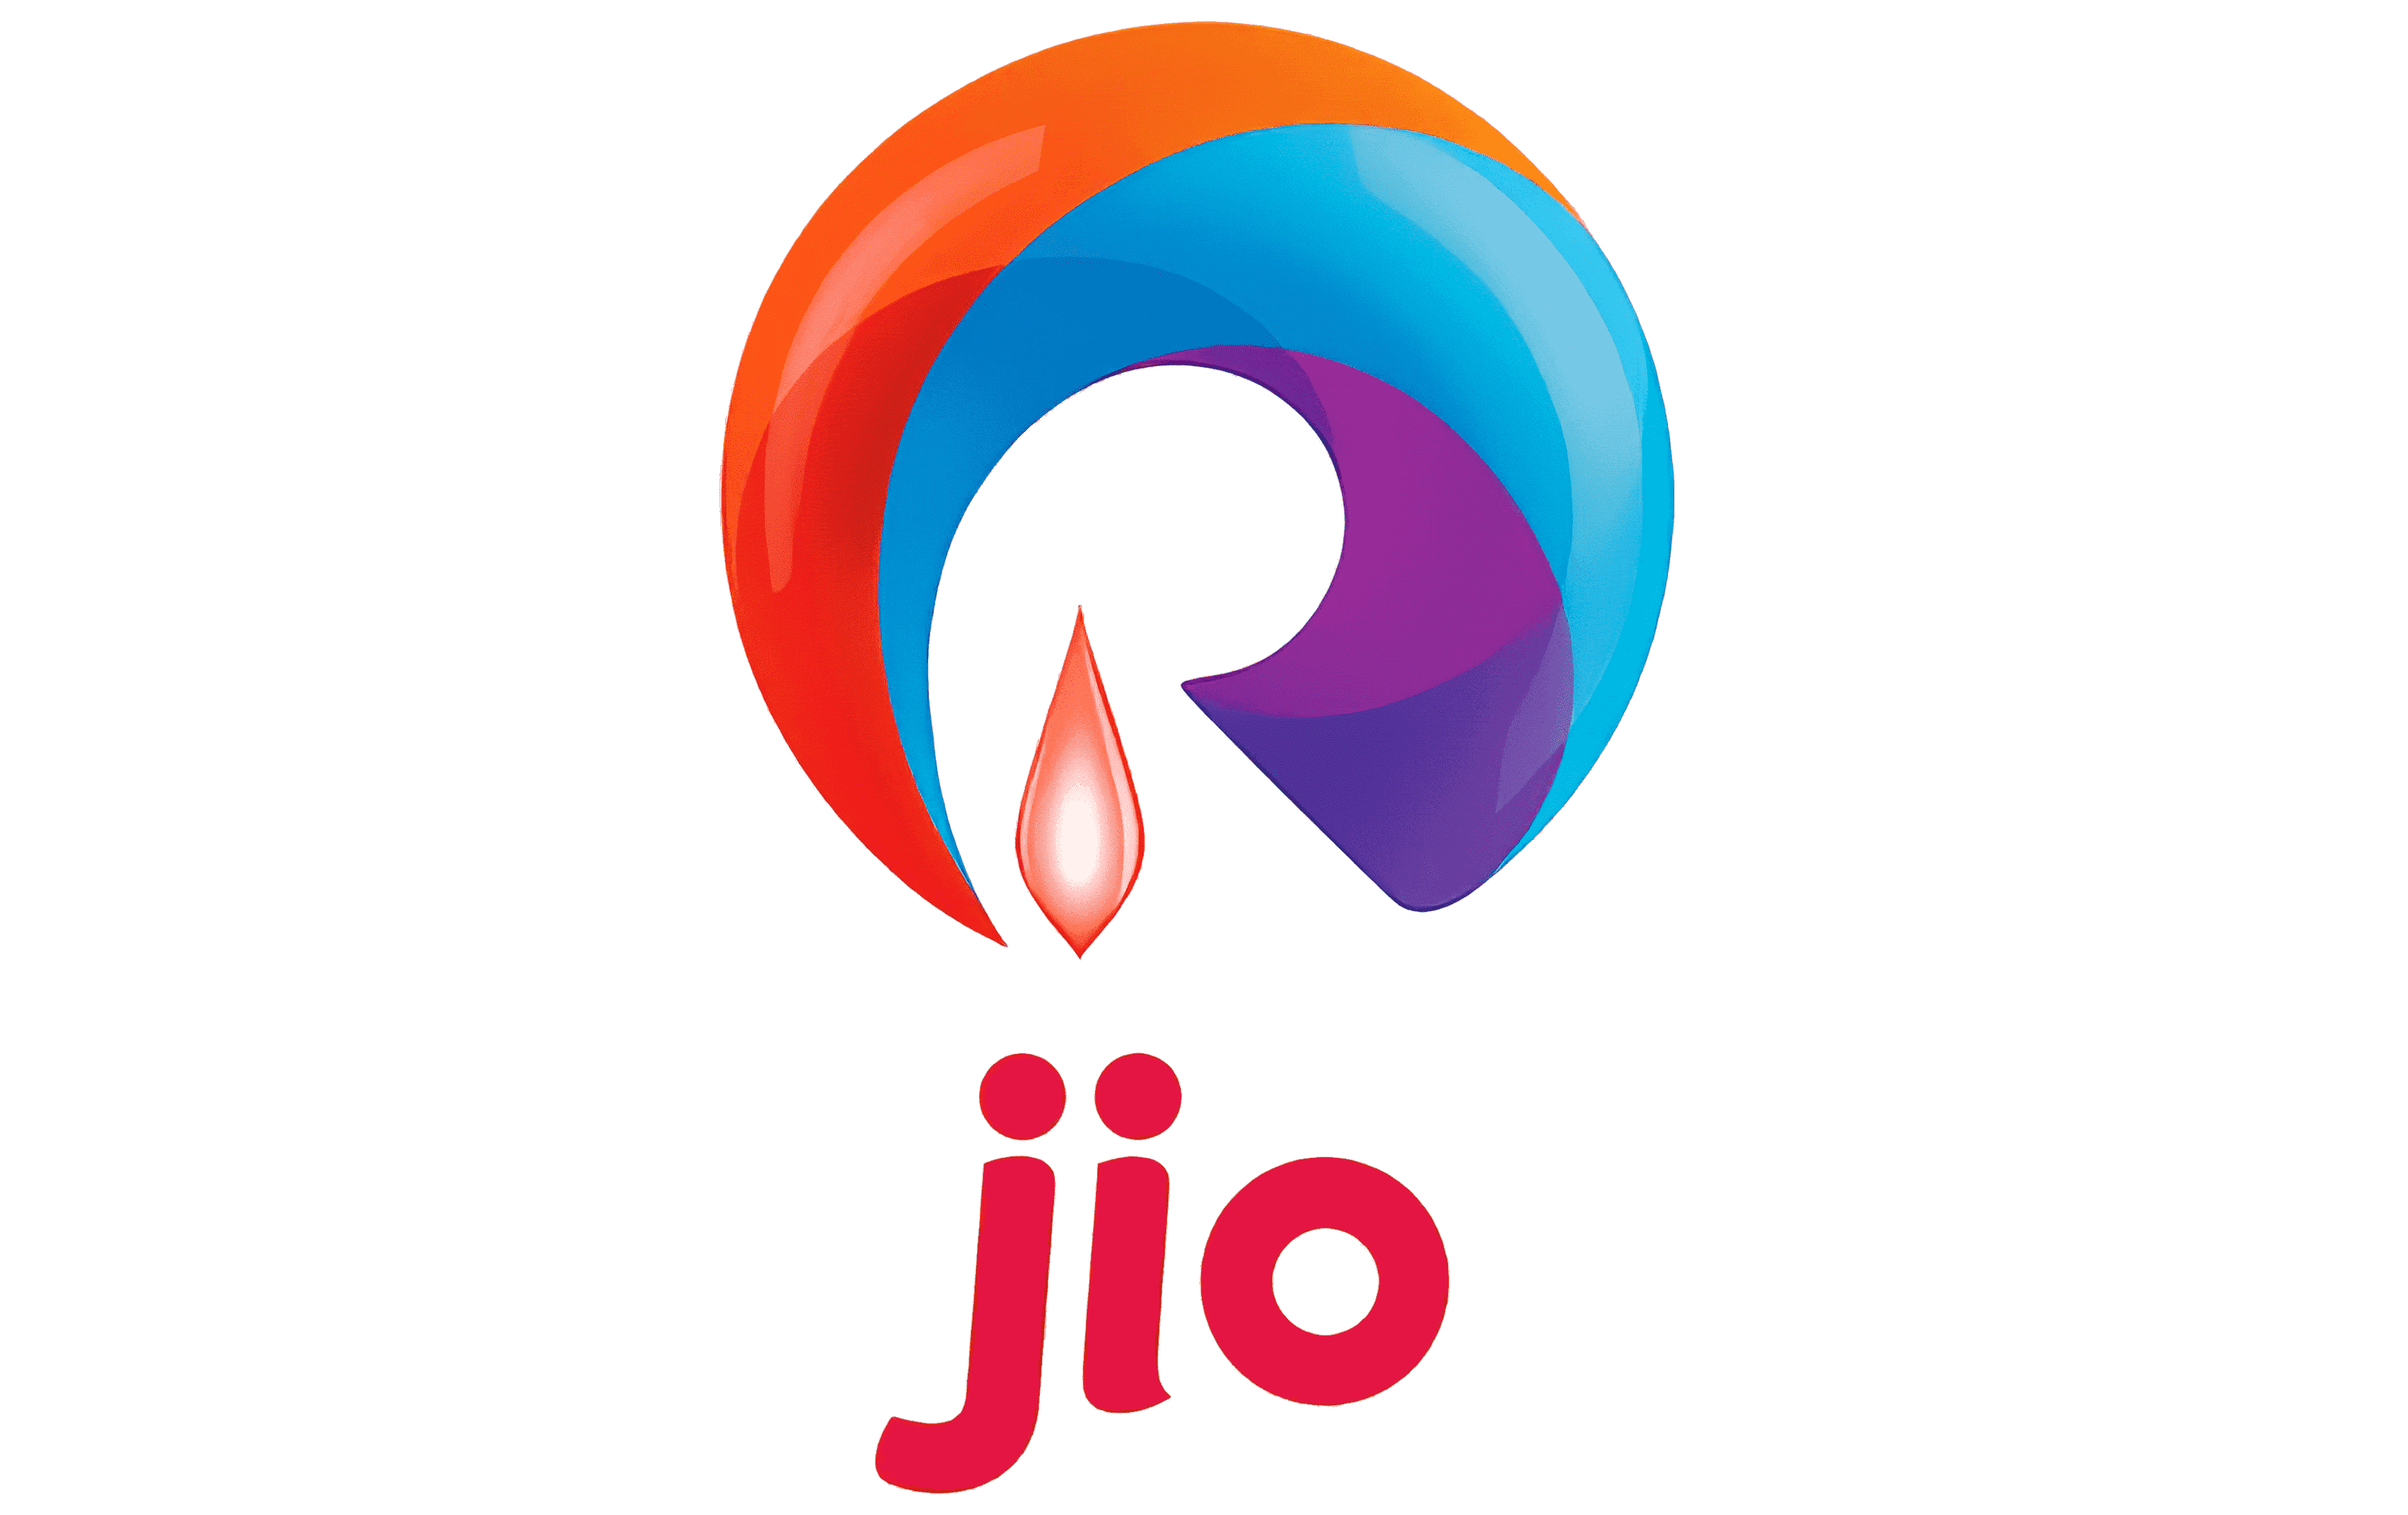 File:Rsz jio jio logo circle 01.png - Wikimedia Commons